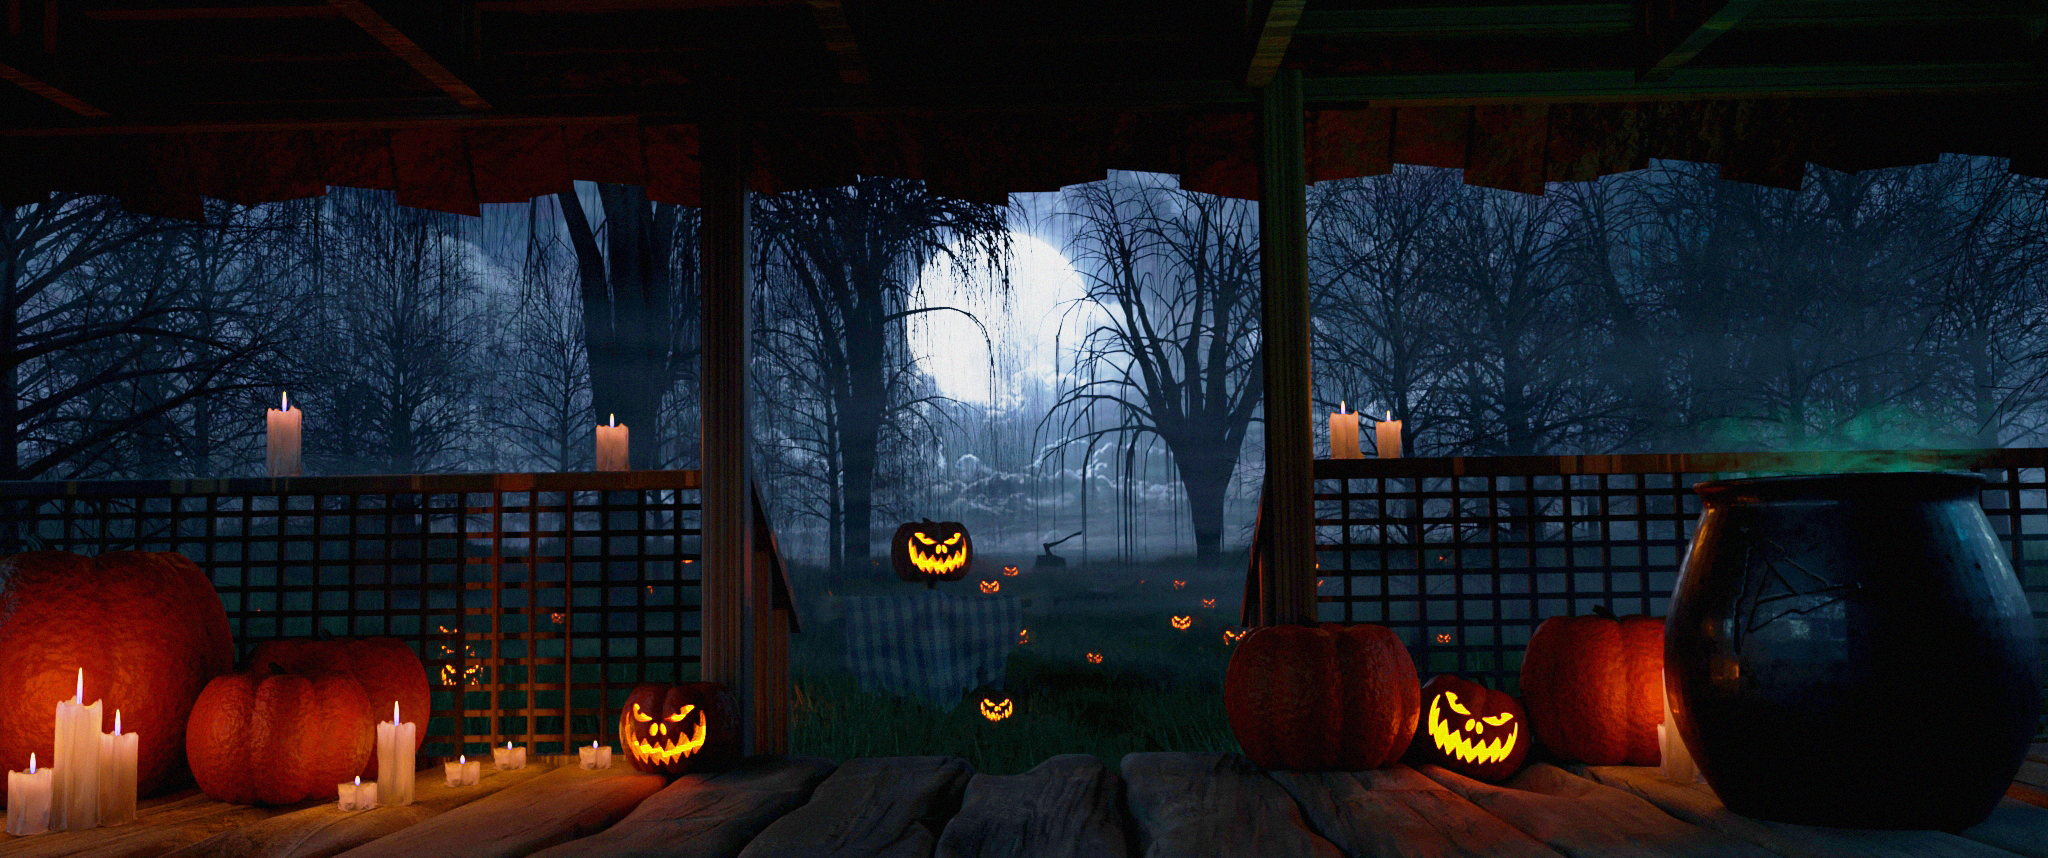 Blender Halloween Candles Pumpkin CGi Scarecrow Character Complex Scene Forest 2048x858